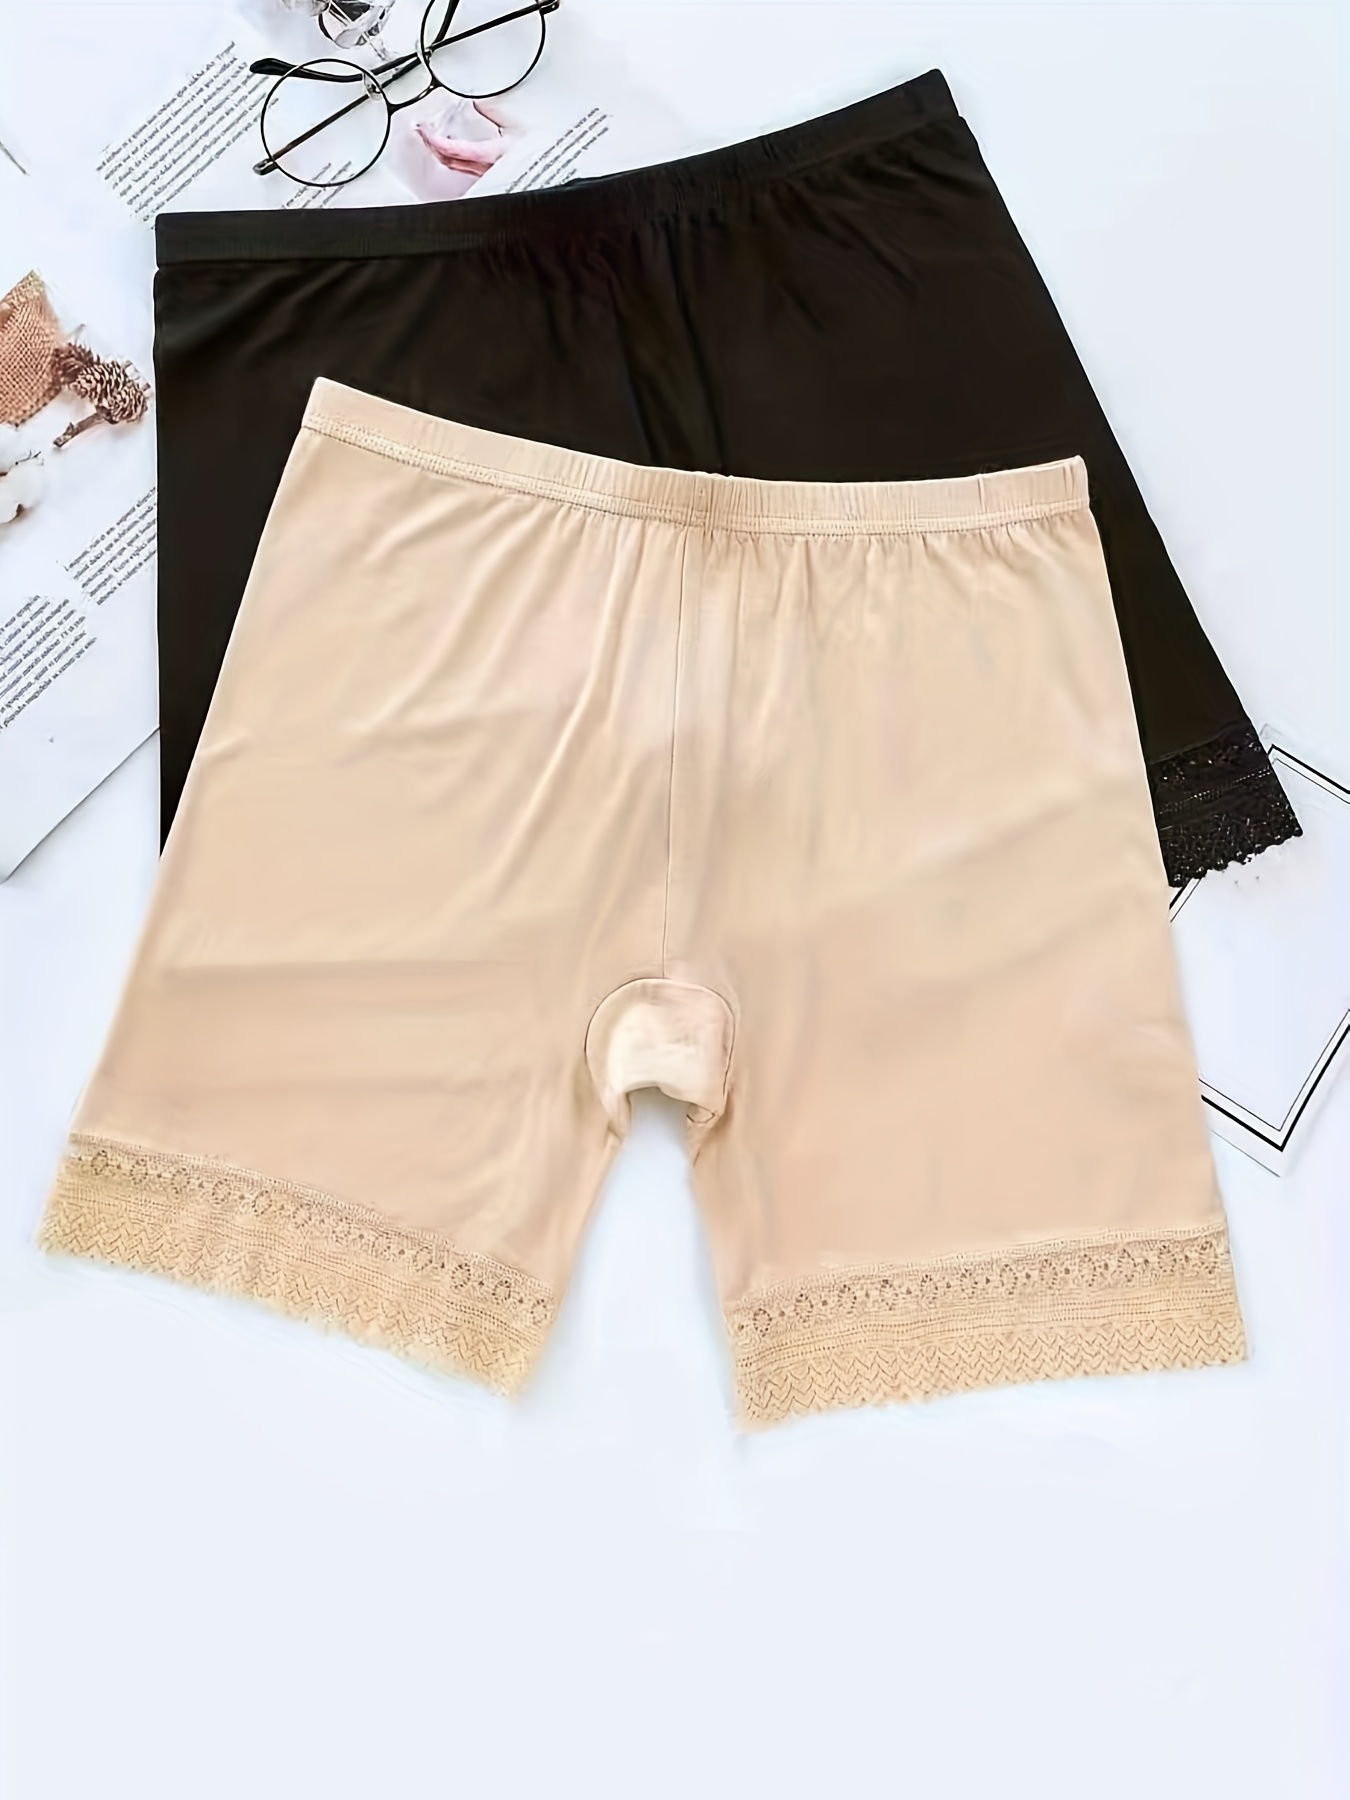 3 Sets Contrast Lace Bra & Panties, Wireless Bra & Bow Tie Panties Lingerie  Set, Women's Lingerie & Underwear